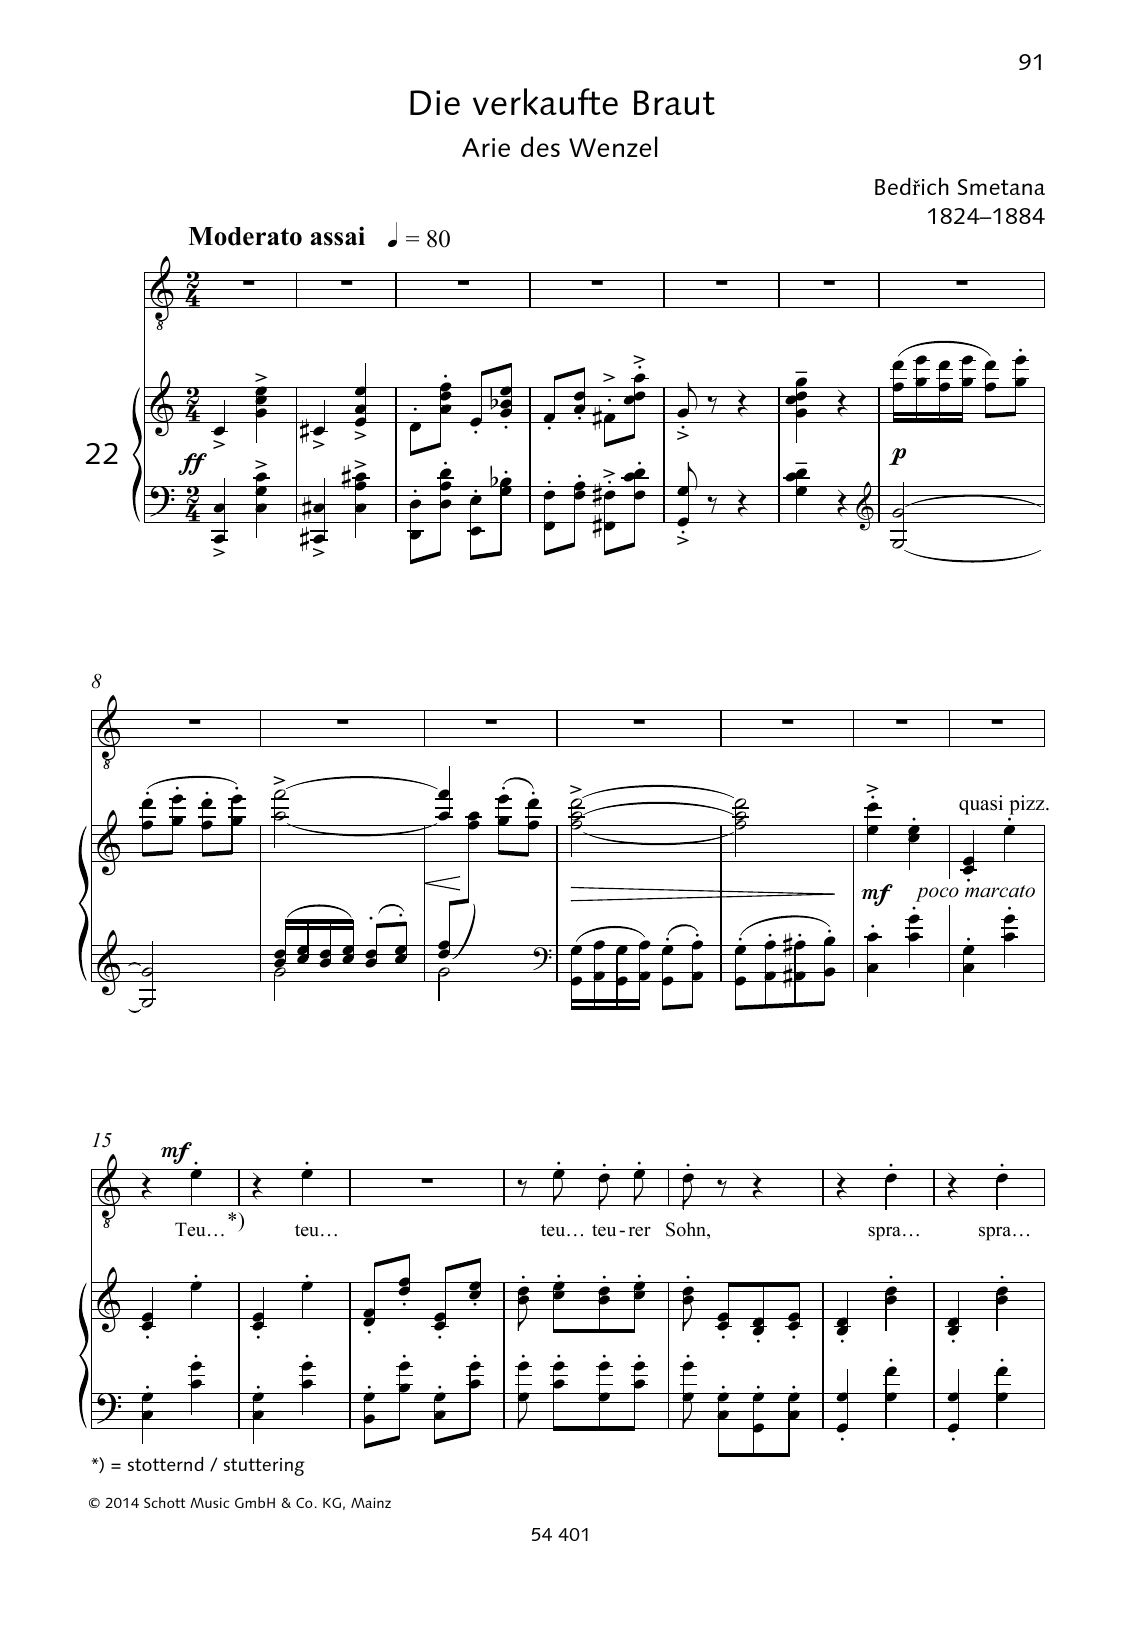 Bedrich Smetana Teu... teu... teu... teurer Sohn Sheet Music Notes & Chords for Piano & Vocal - Download or Print PDF